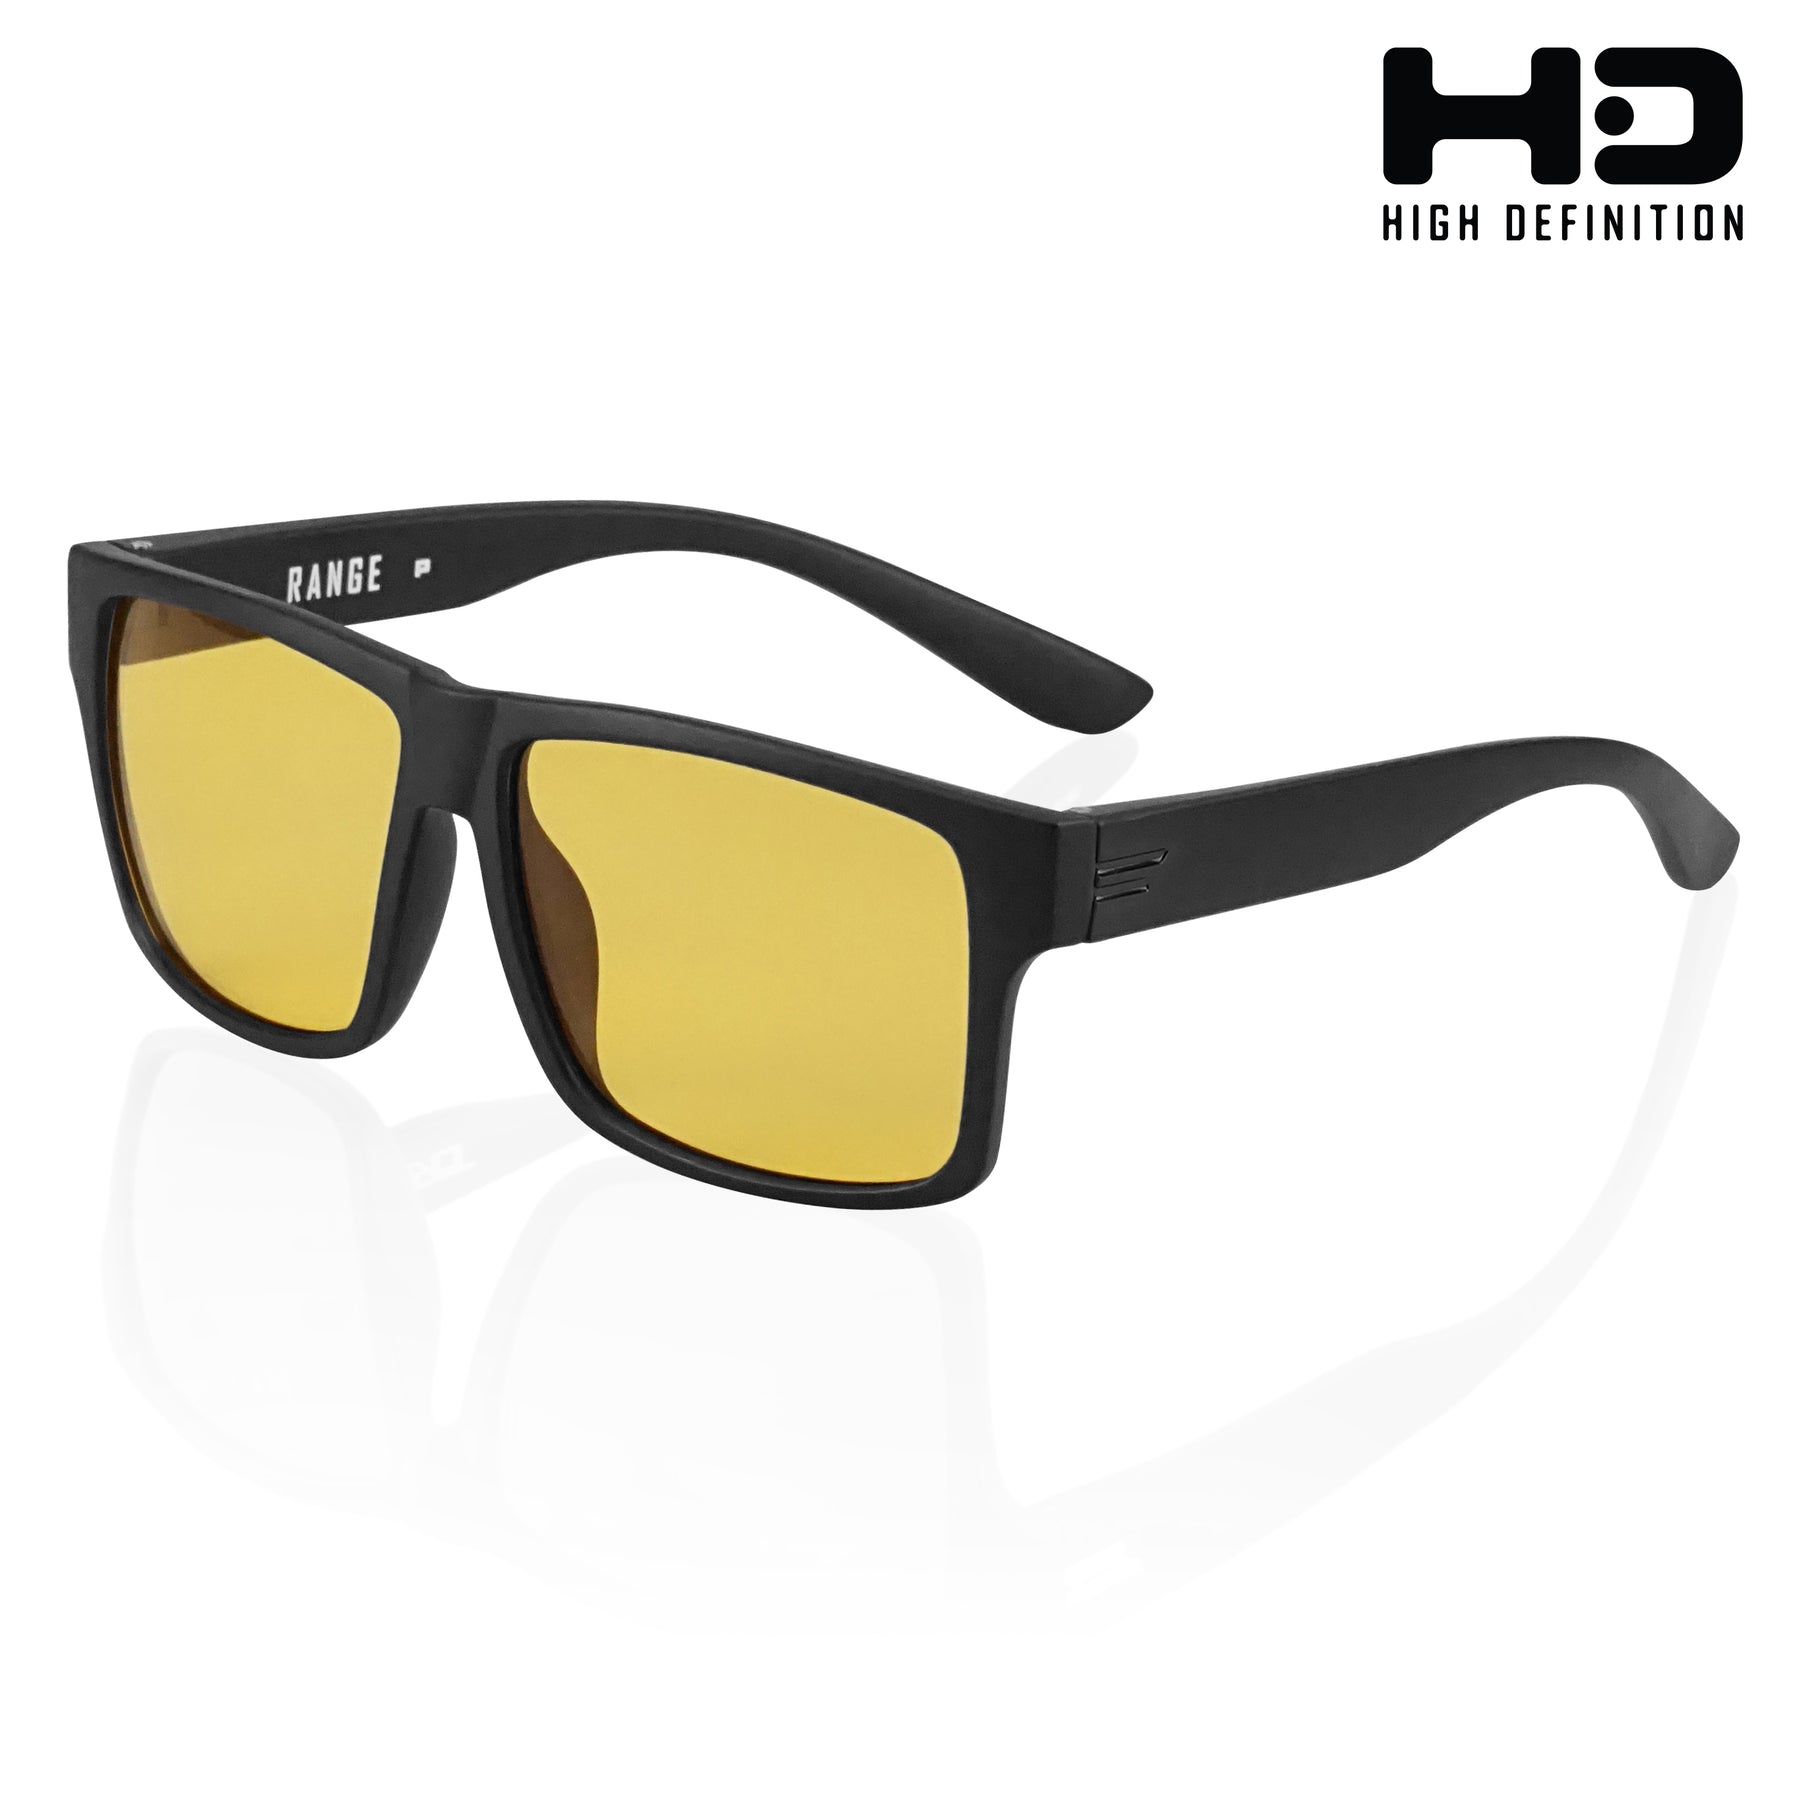 High Definition sunglasses NIGHT DRIVING Low light RANGE HD Polarized –  TOROE Performance Eyewear